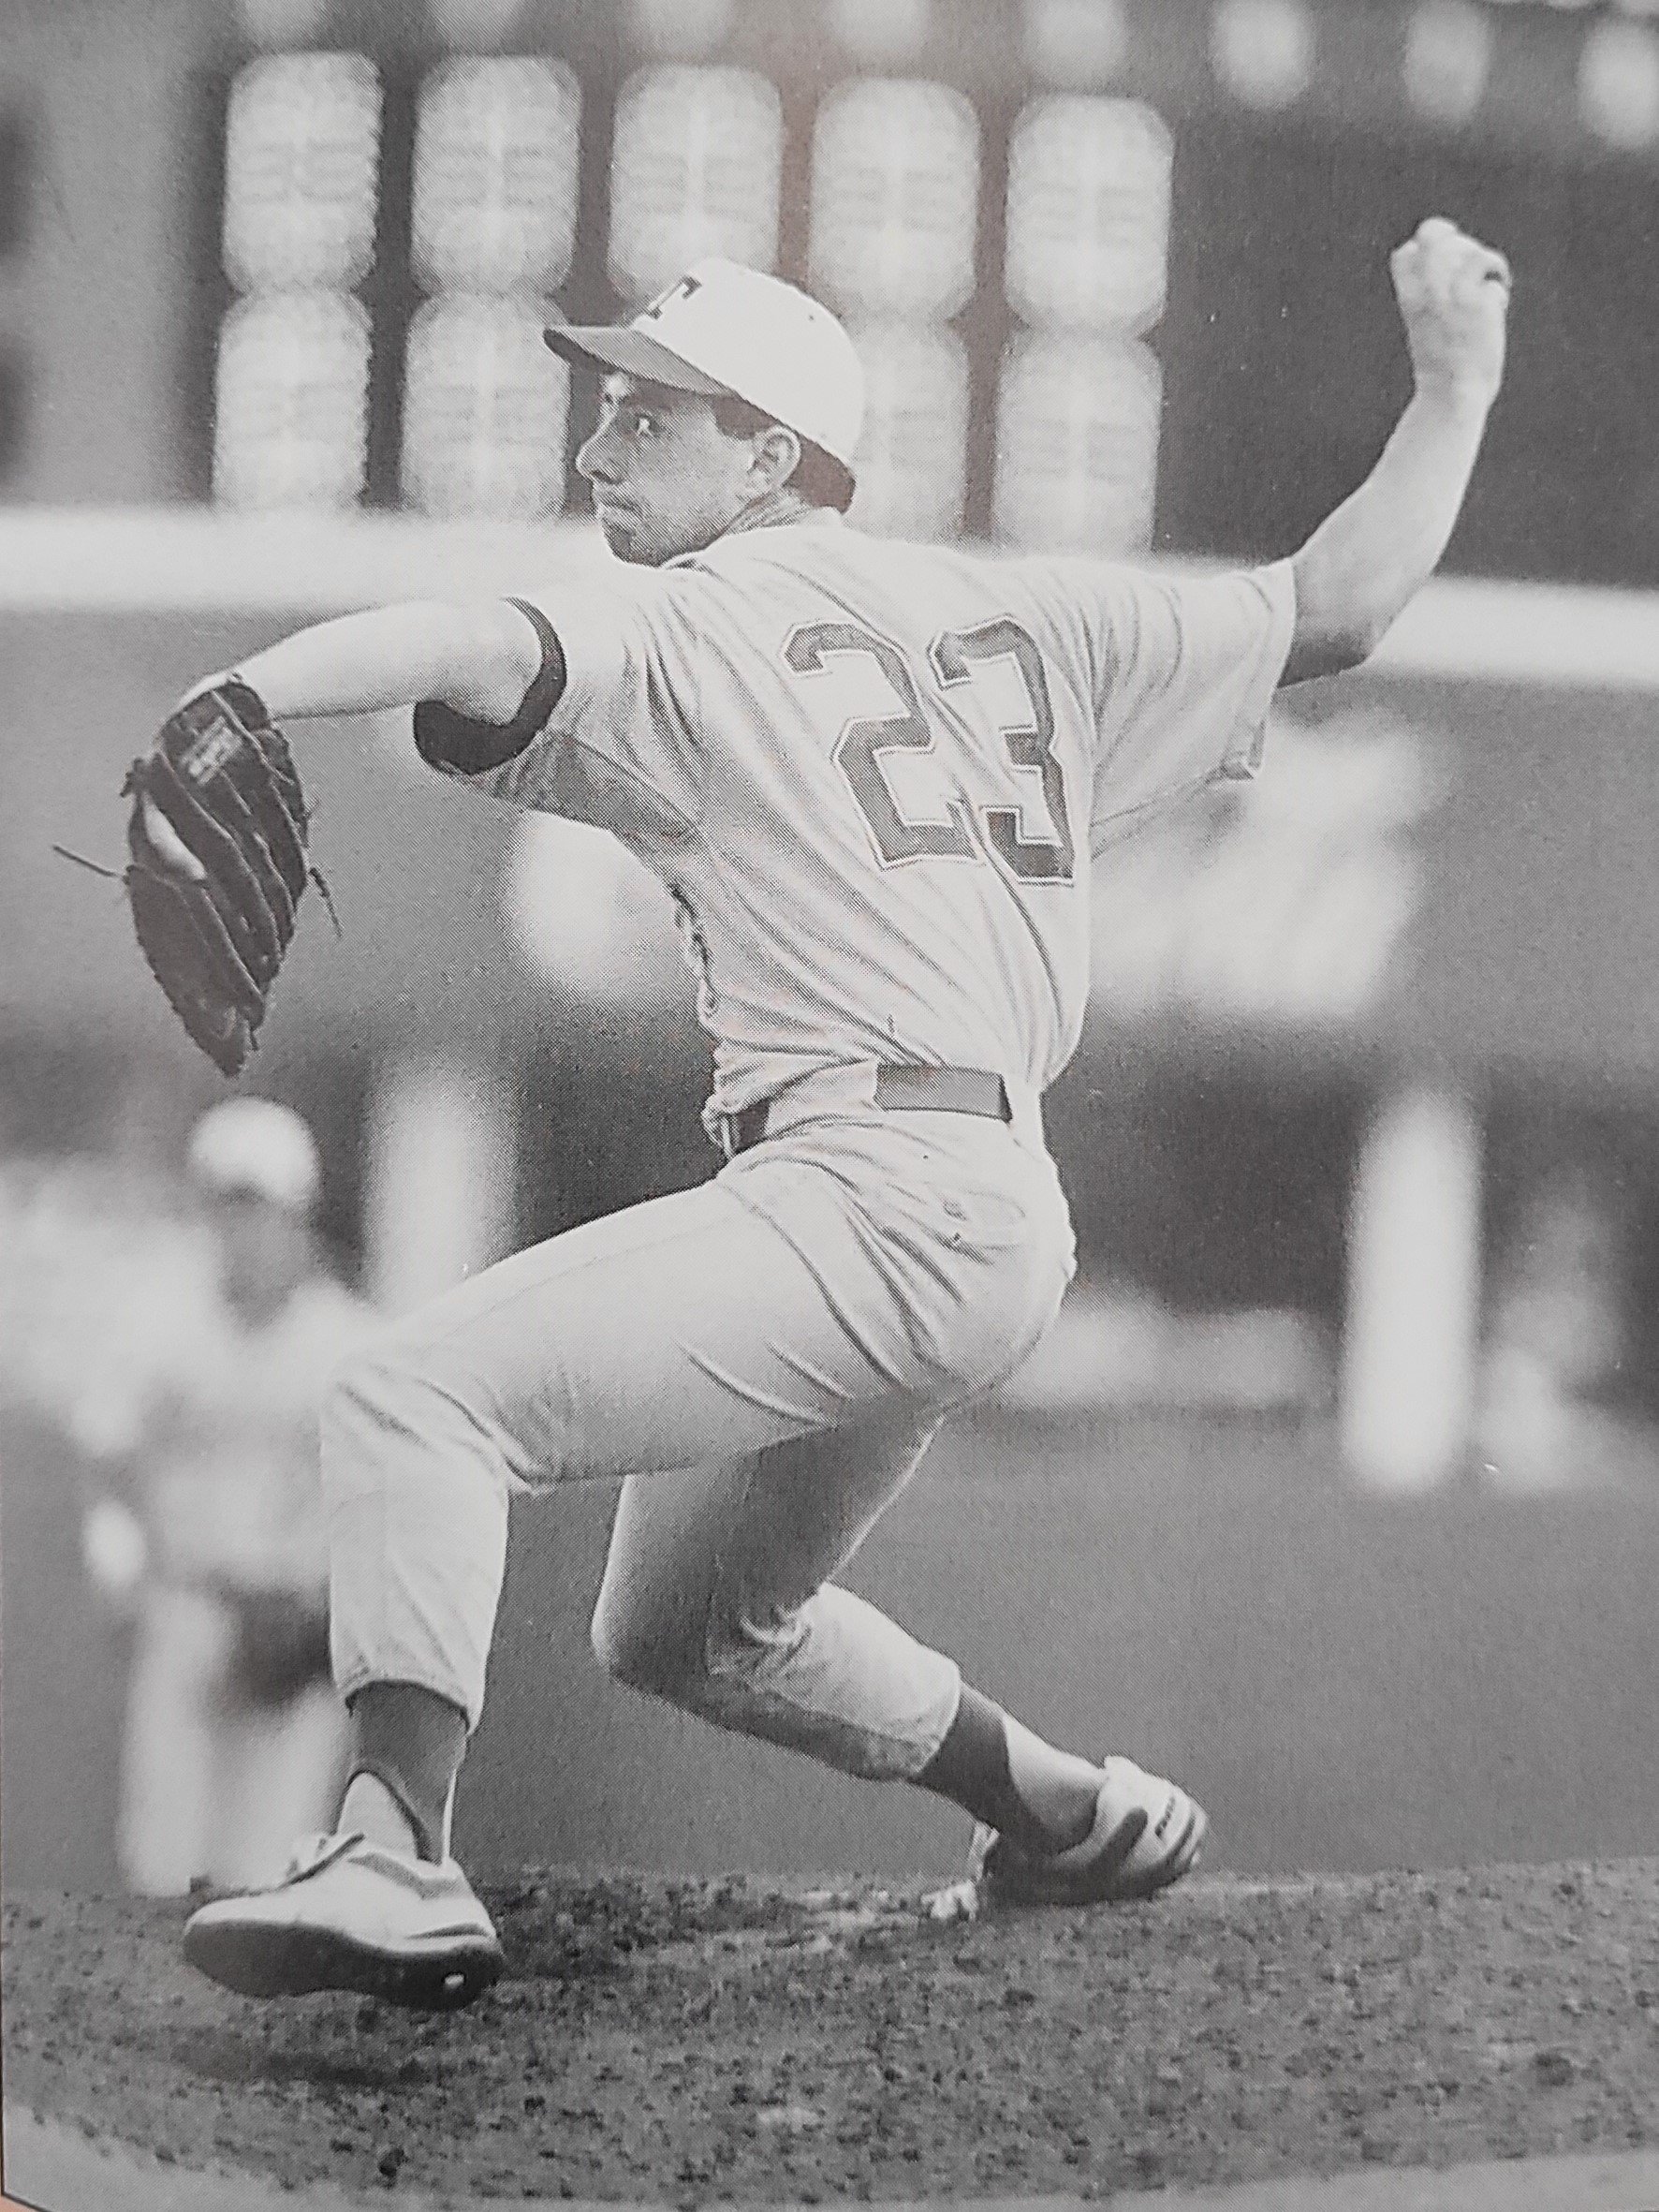 1990-1991 baseball  brooks Kieschnick.jpg